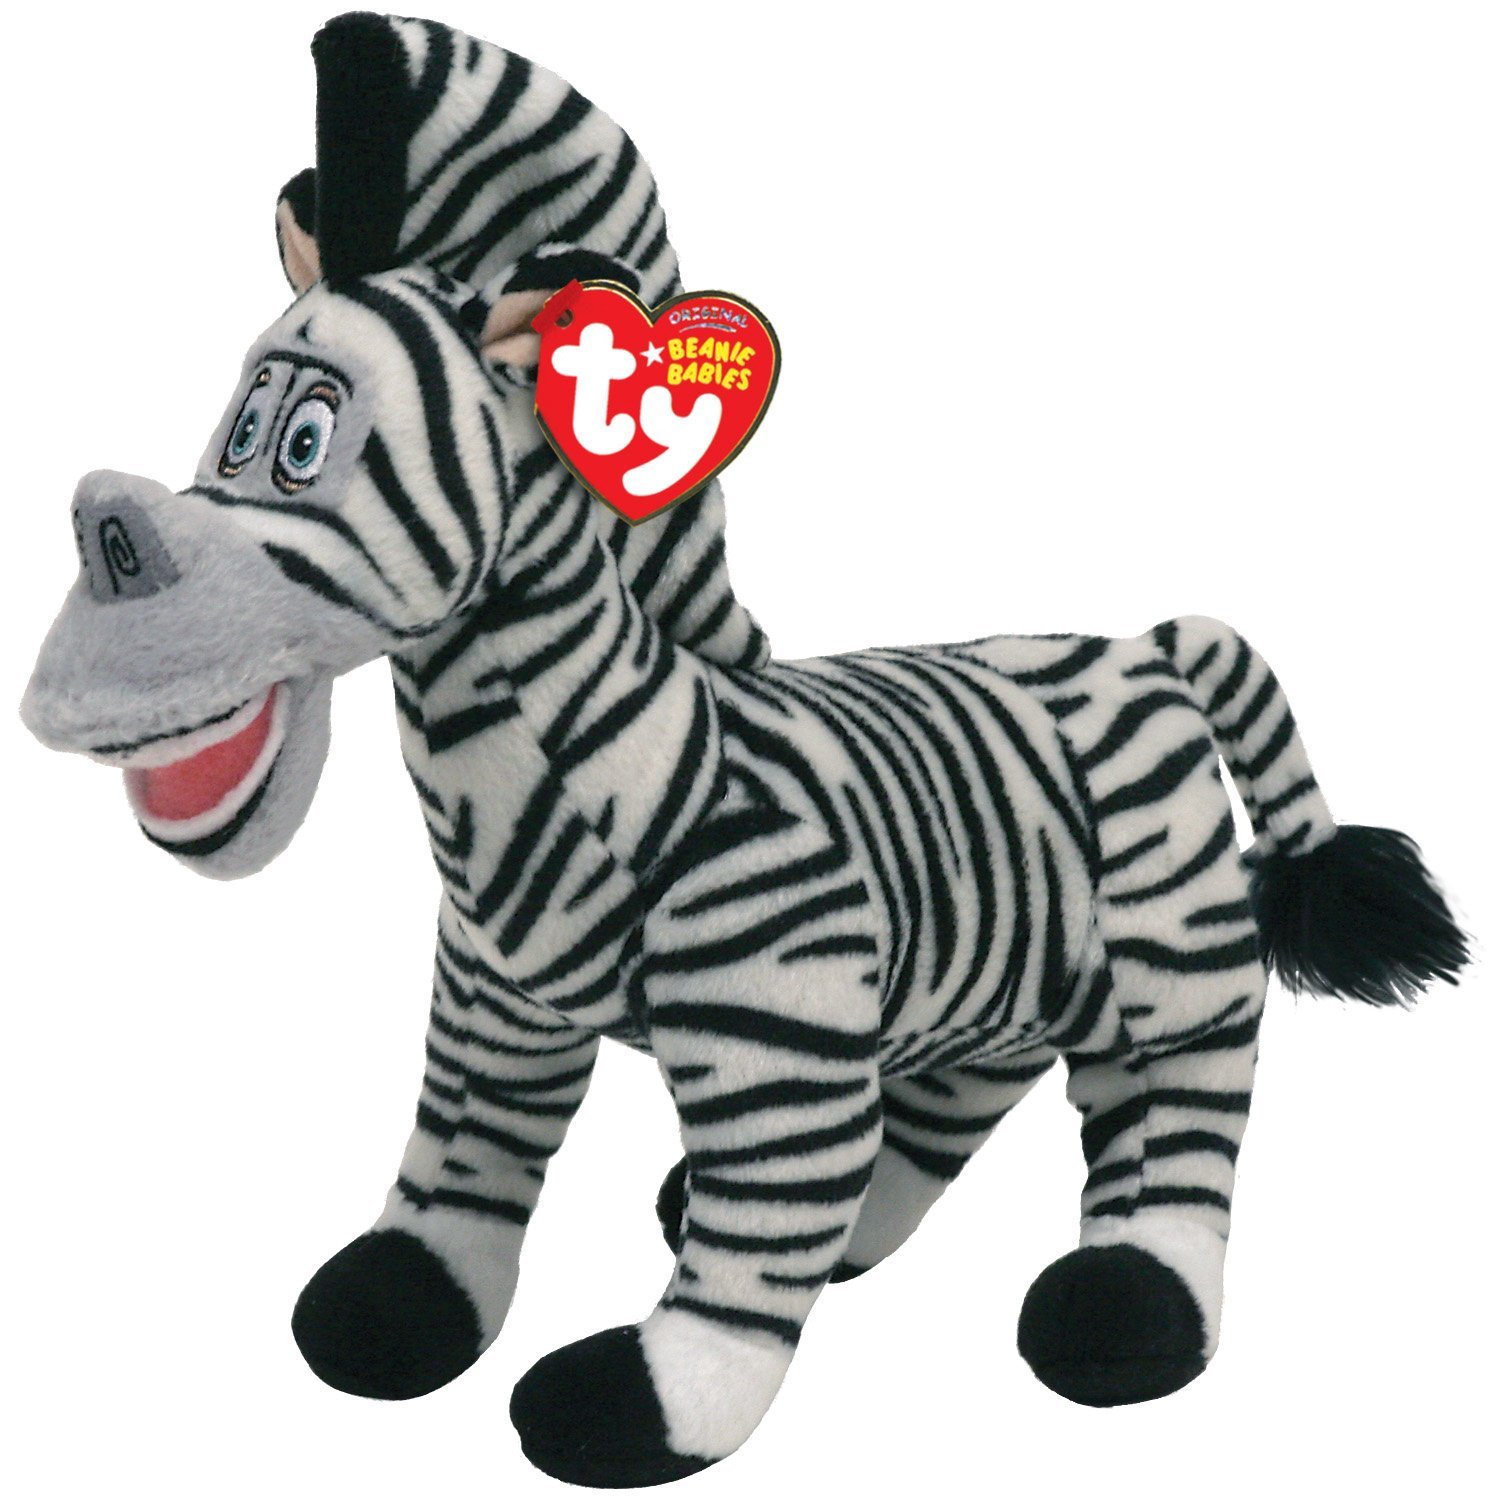 Zebra toy photo